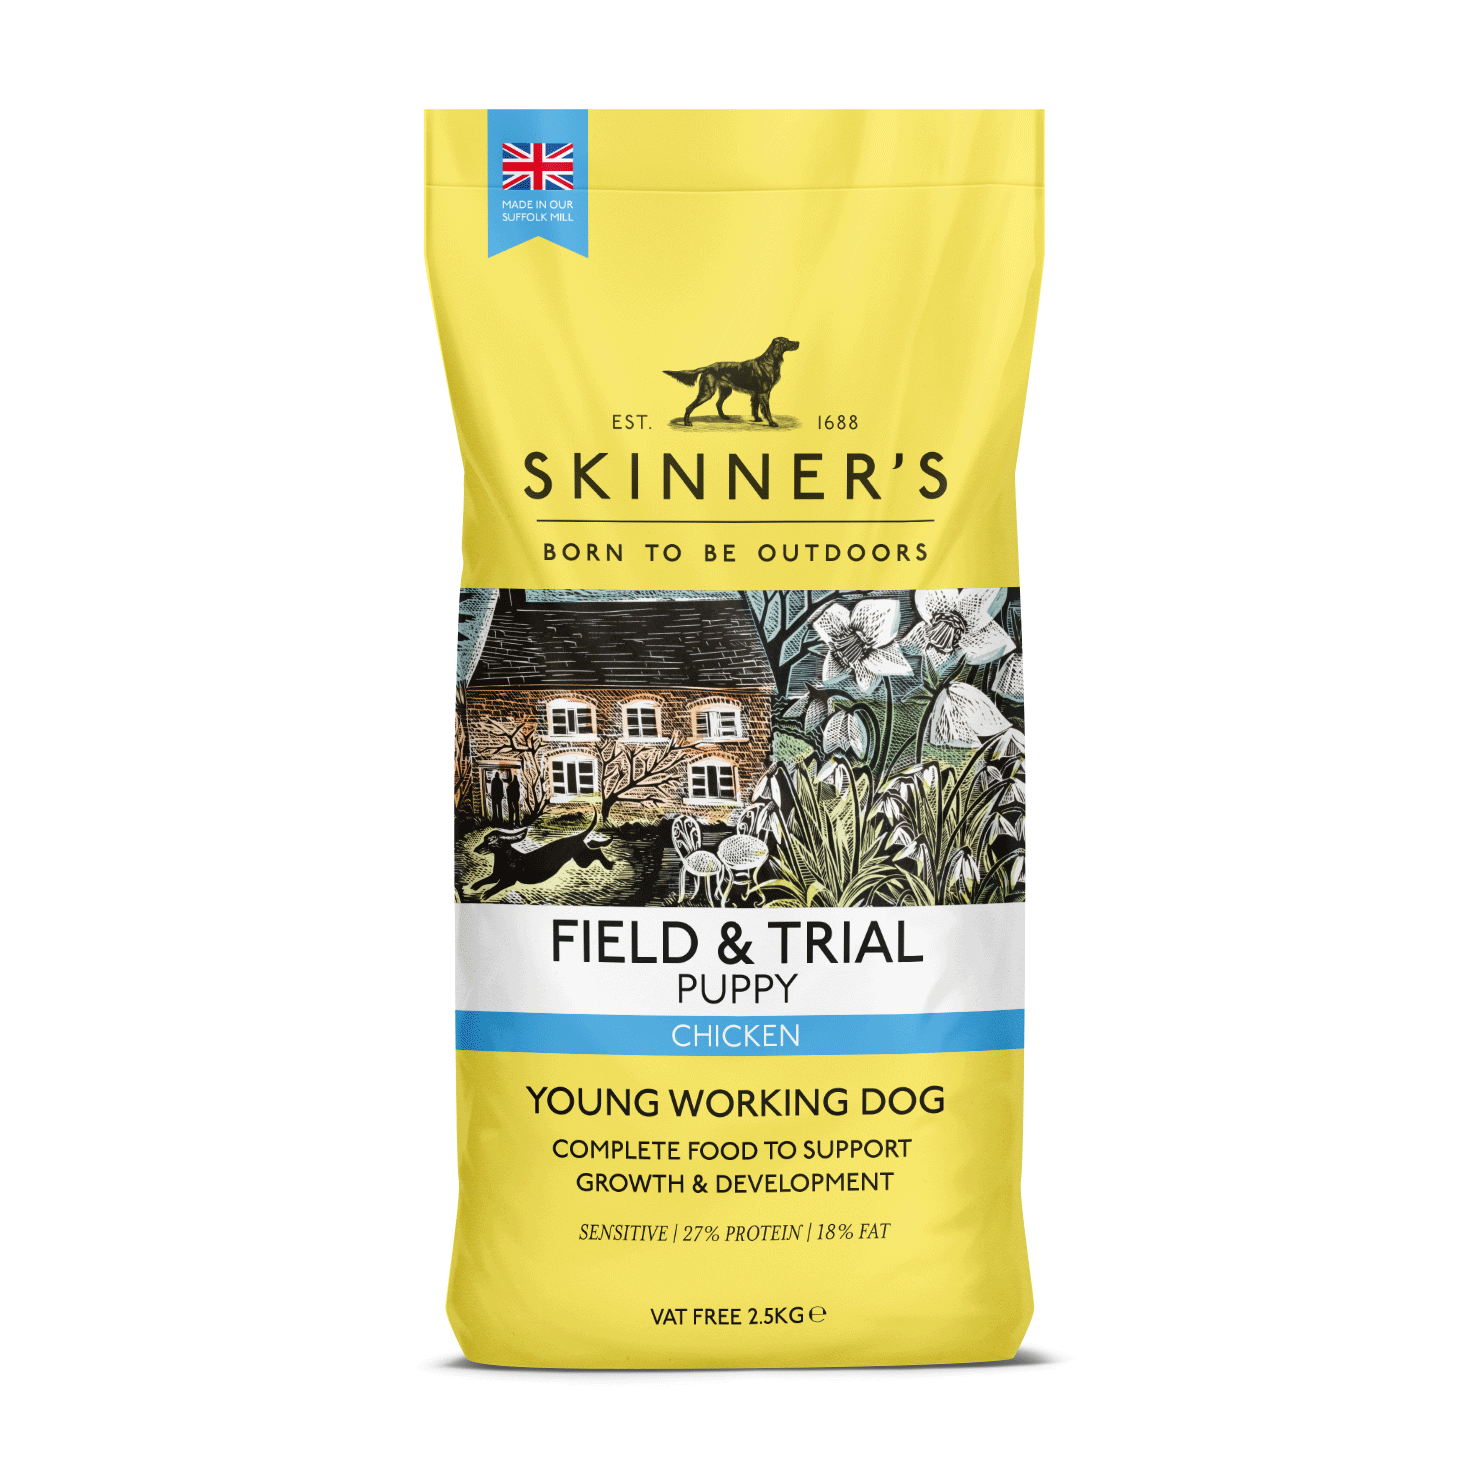 Skinners Field & Trial Puppy Chicken 2.5kg